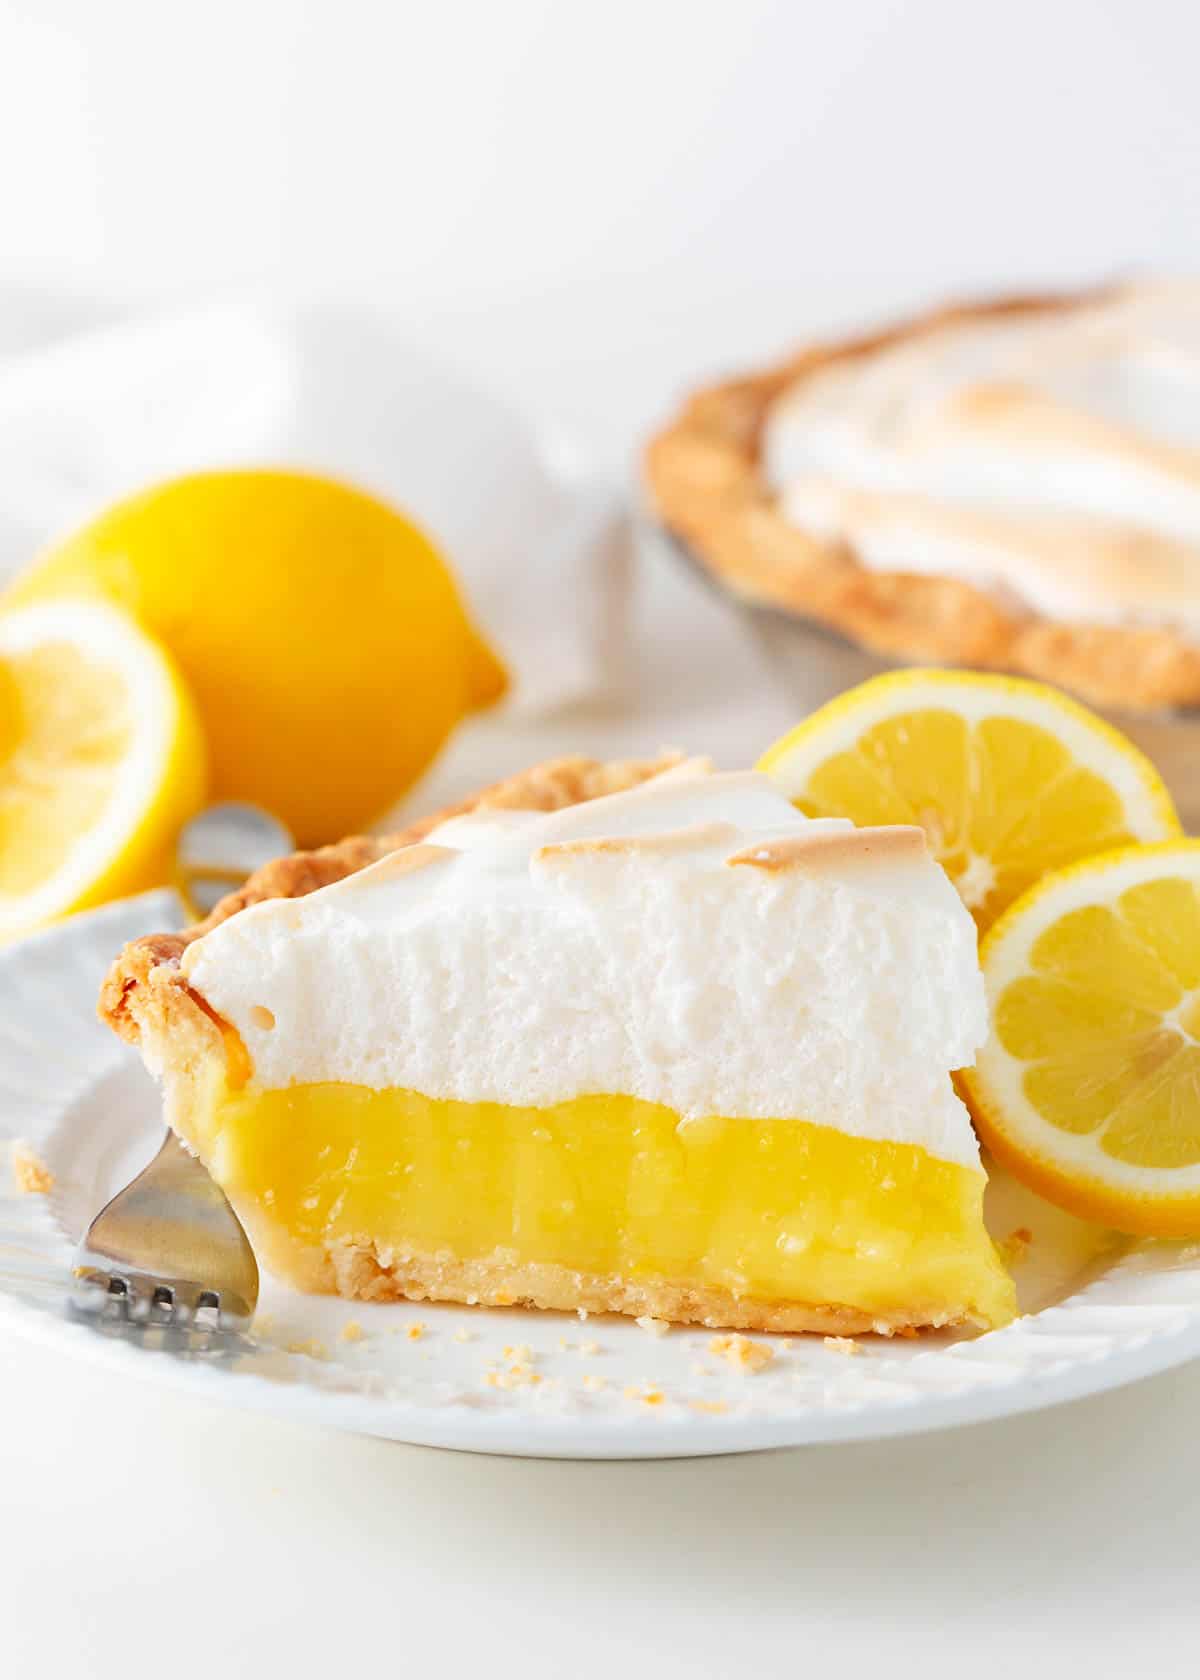 Slice of lemon meringue pie on a white plate.